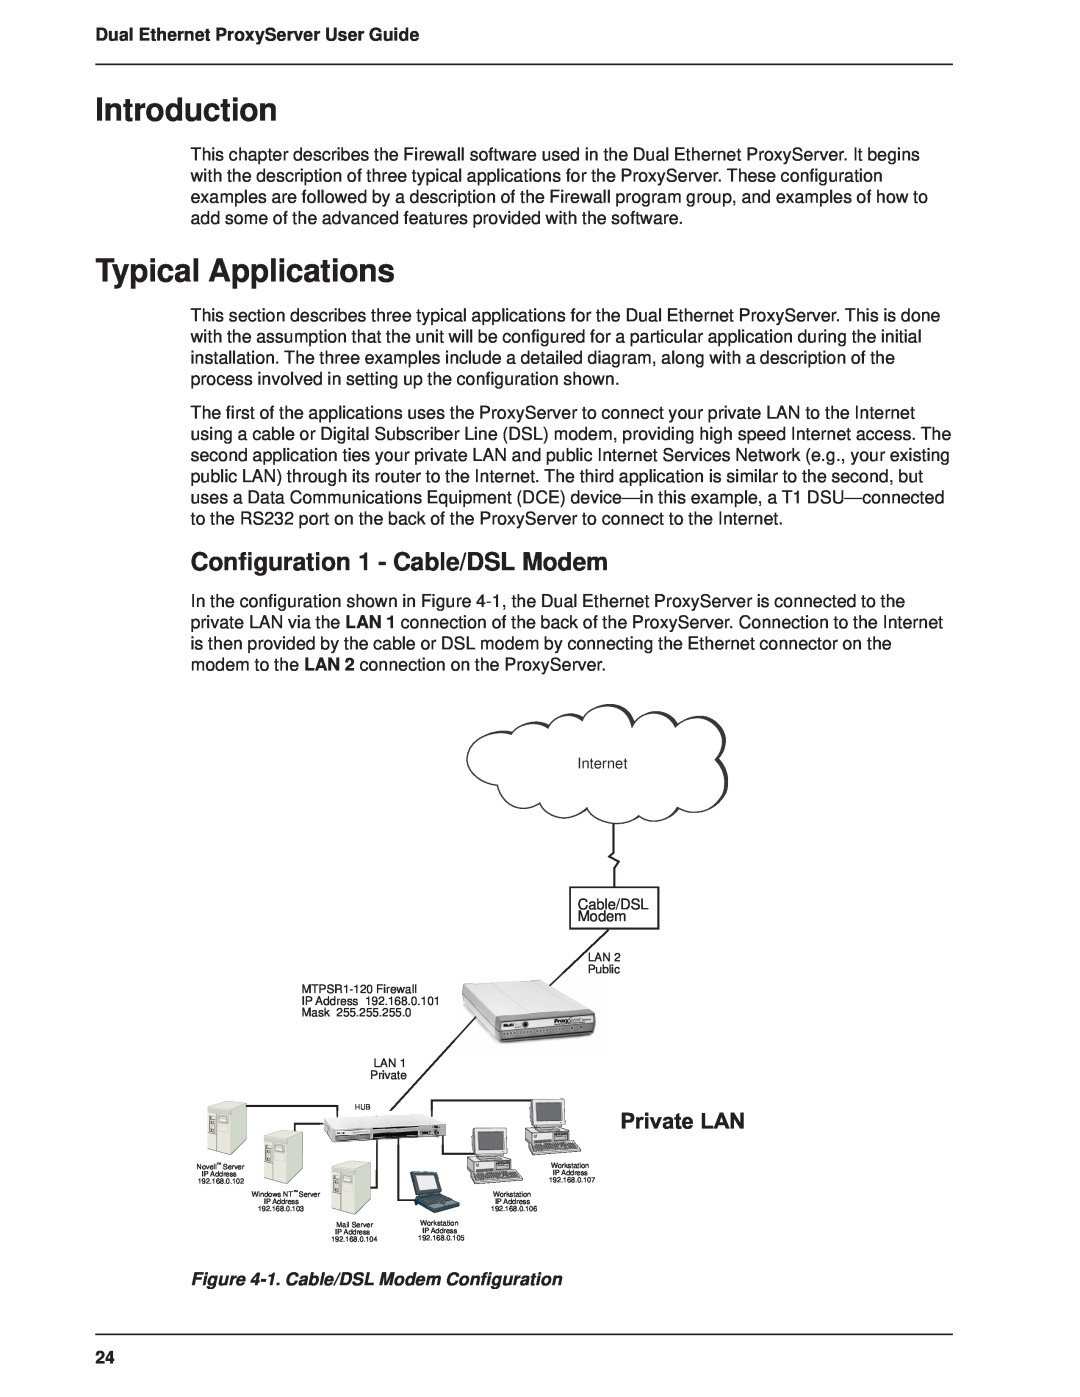 Multitech MTPSR1-120 manual Typical Applications, Configuration 1 - Cable/DSL Modem, 1. Cable/DSL Modem Configuration 